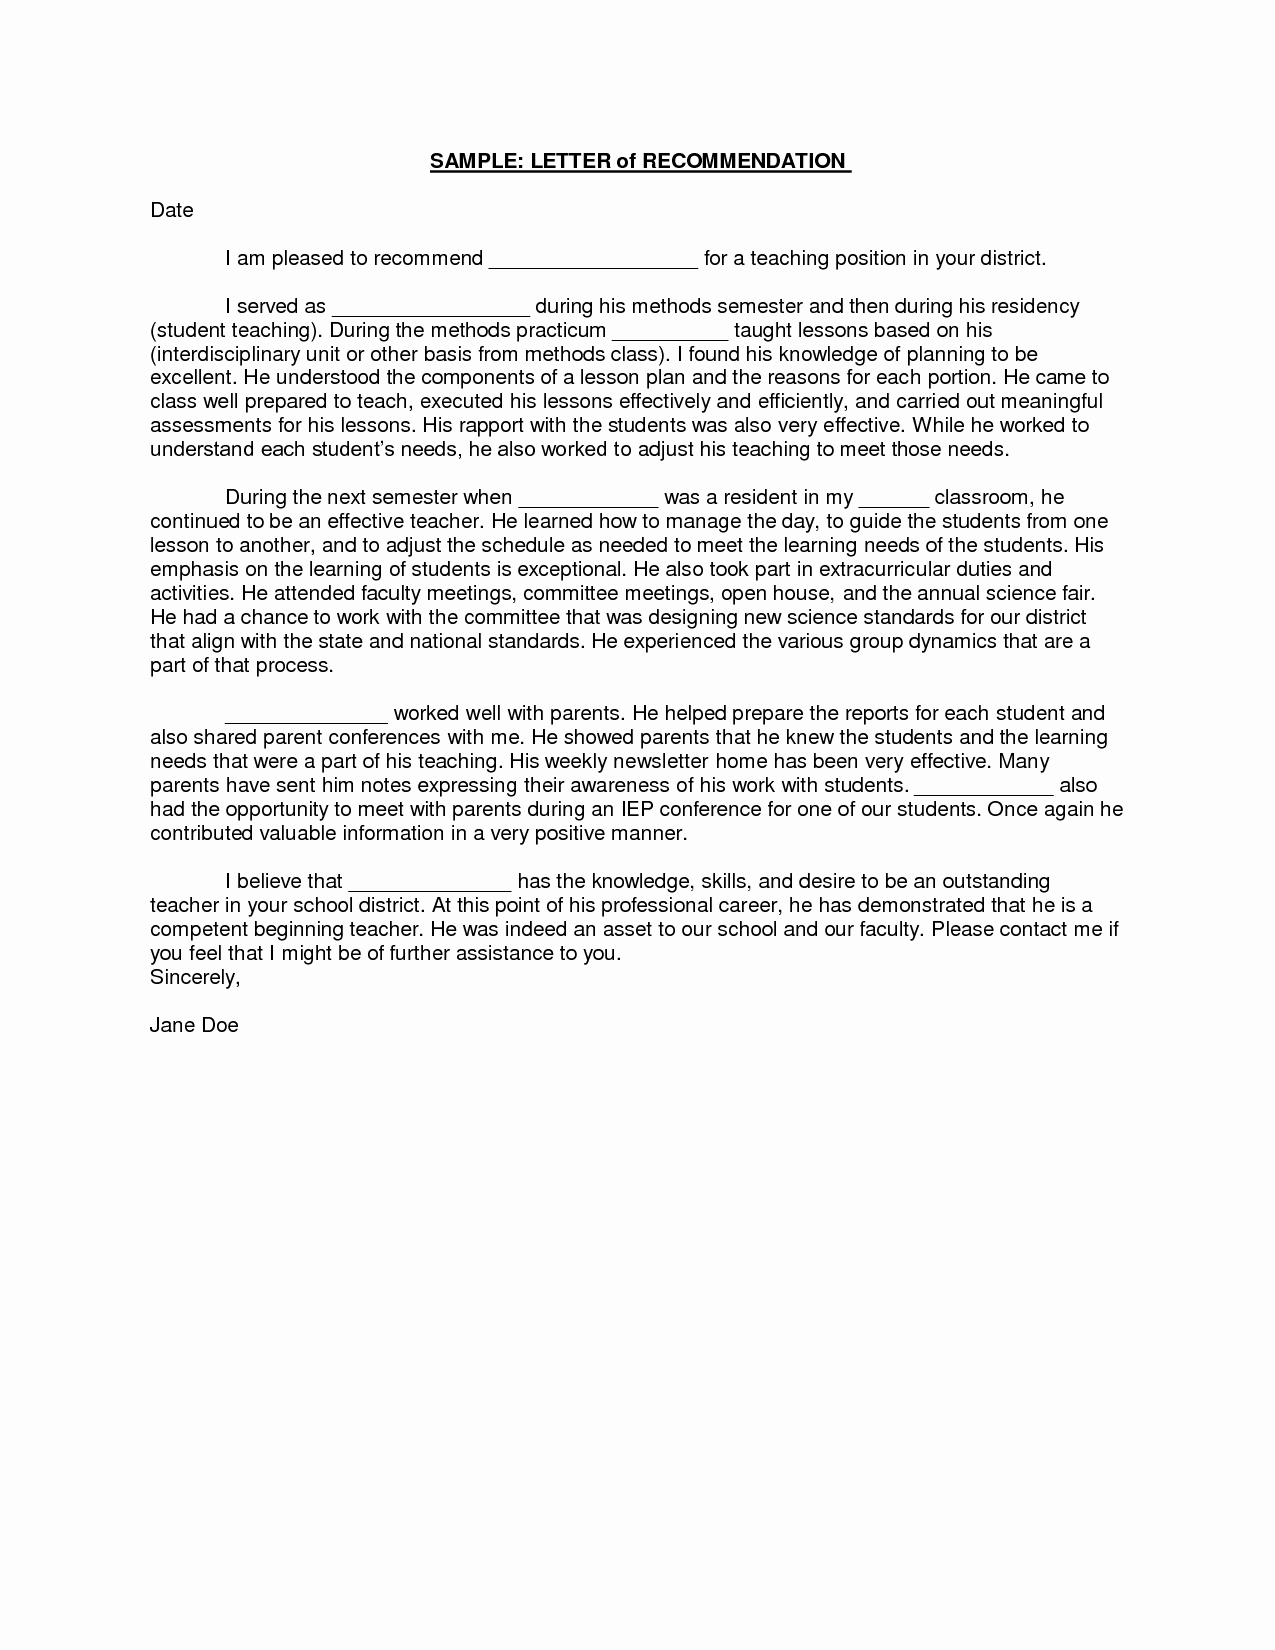 College Recommendation Letter From Parent Inspirational Sample Student Teacher Re Mendation Letters V9nqmvof